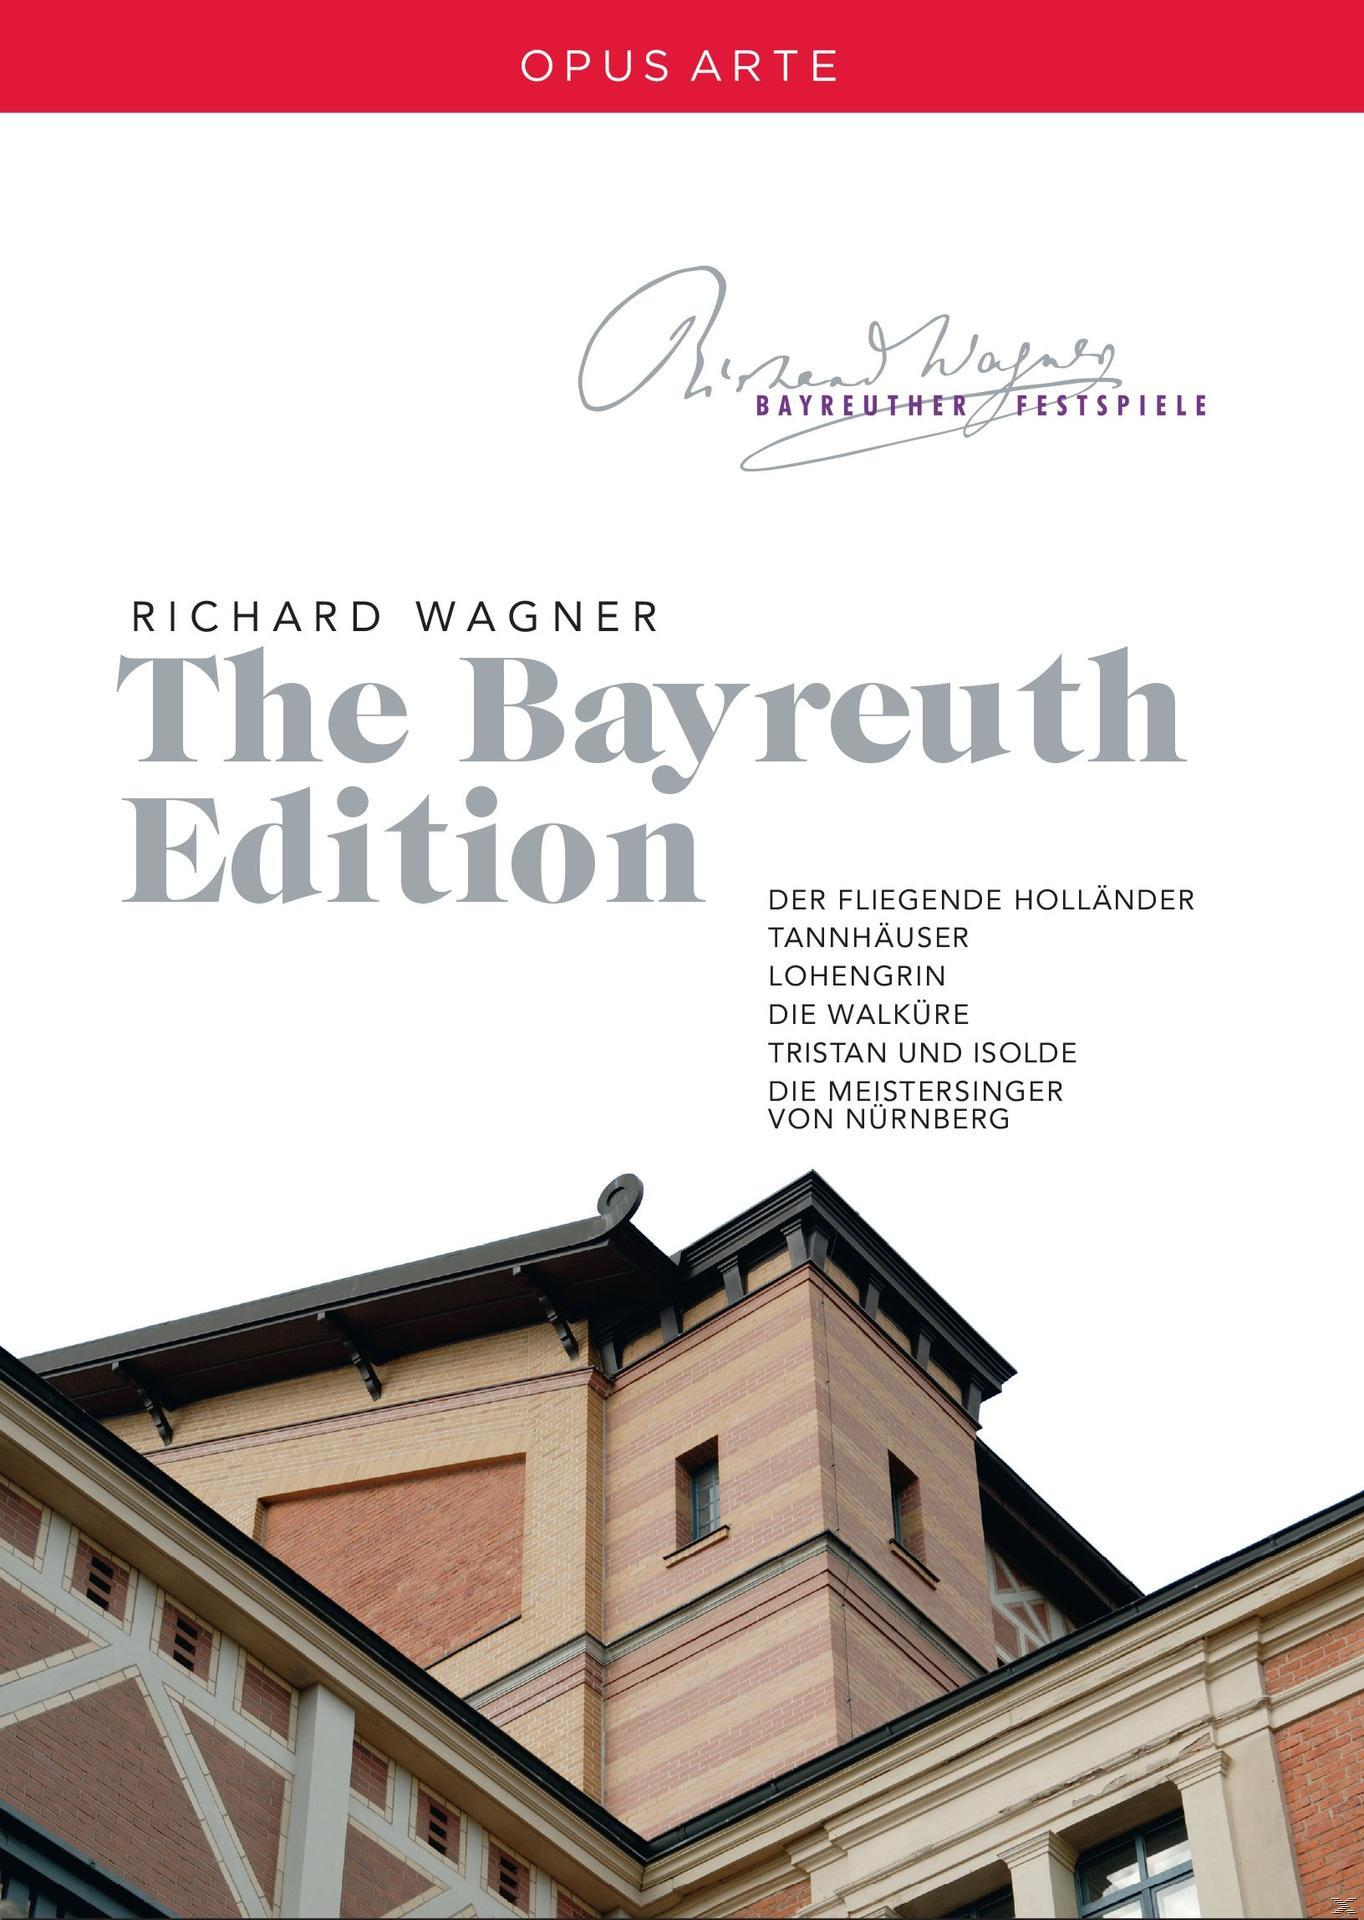 VARIOUS, Bayreuther Festivalorchester, Bayreuther Festivalchor - - Edition Bayreuth The (DVD)